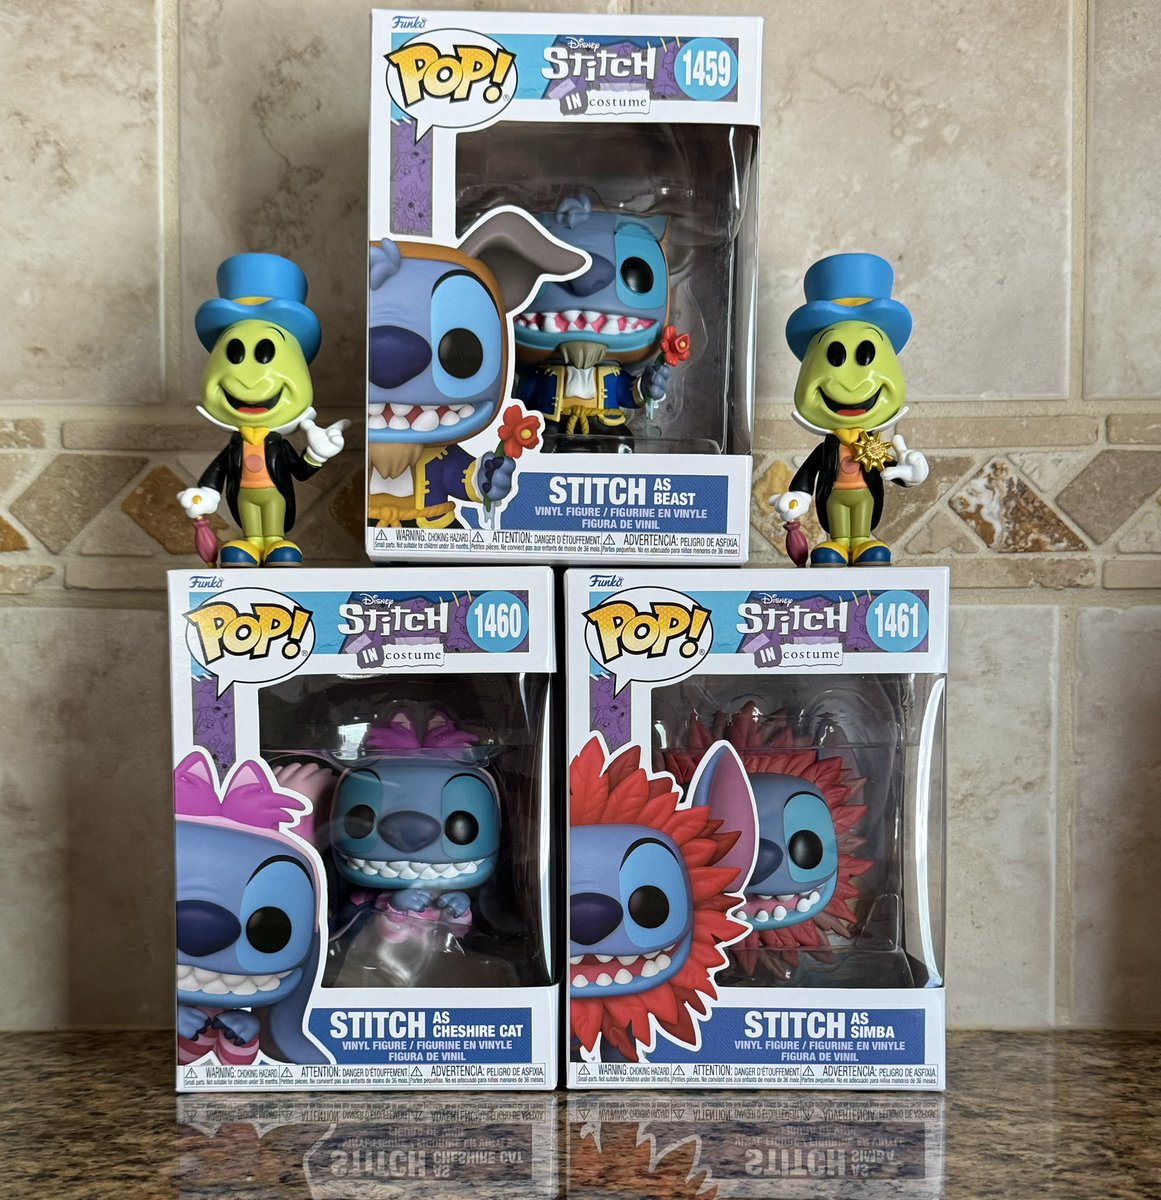 Picked up the new Stitch Pops & Jiminy Sodas! . #Disney #LiloandStitch #Pinocchio #Jiminy #Funko #FunkoPop #FunkoPopVinyl #Pop #PopVinyl #Collectibles #Collectible #FunkoCollector #FunkoPops #Collector #Toy #Toys #DisTrackers